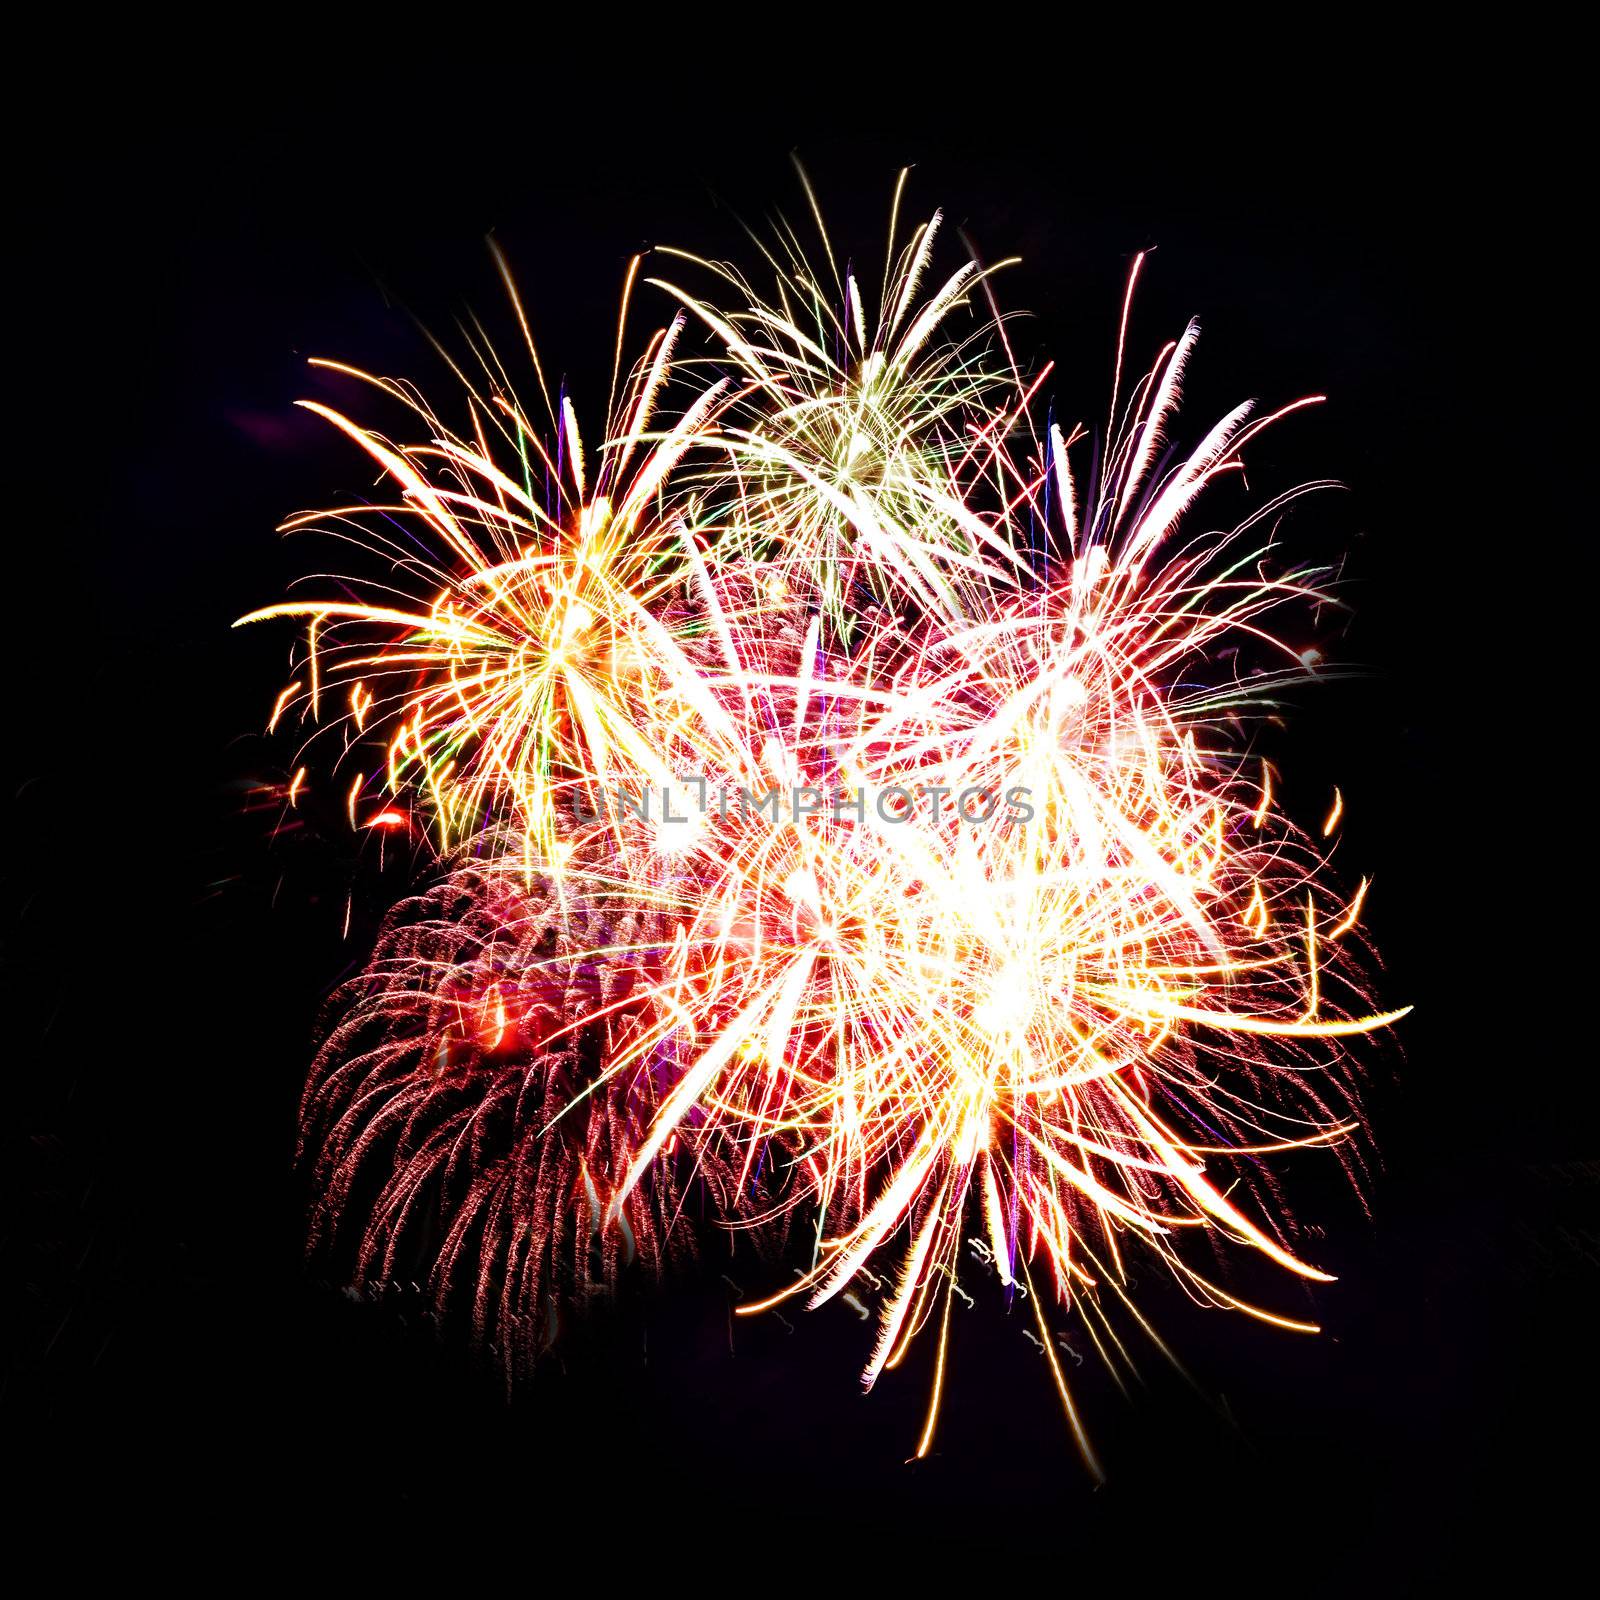 Firework streaks in night sky, celebration background